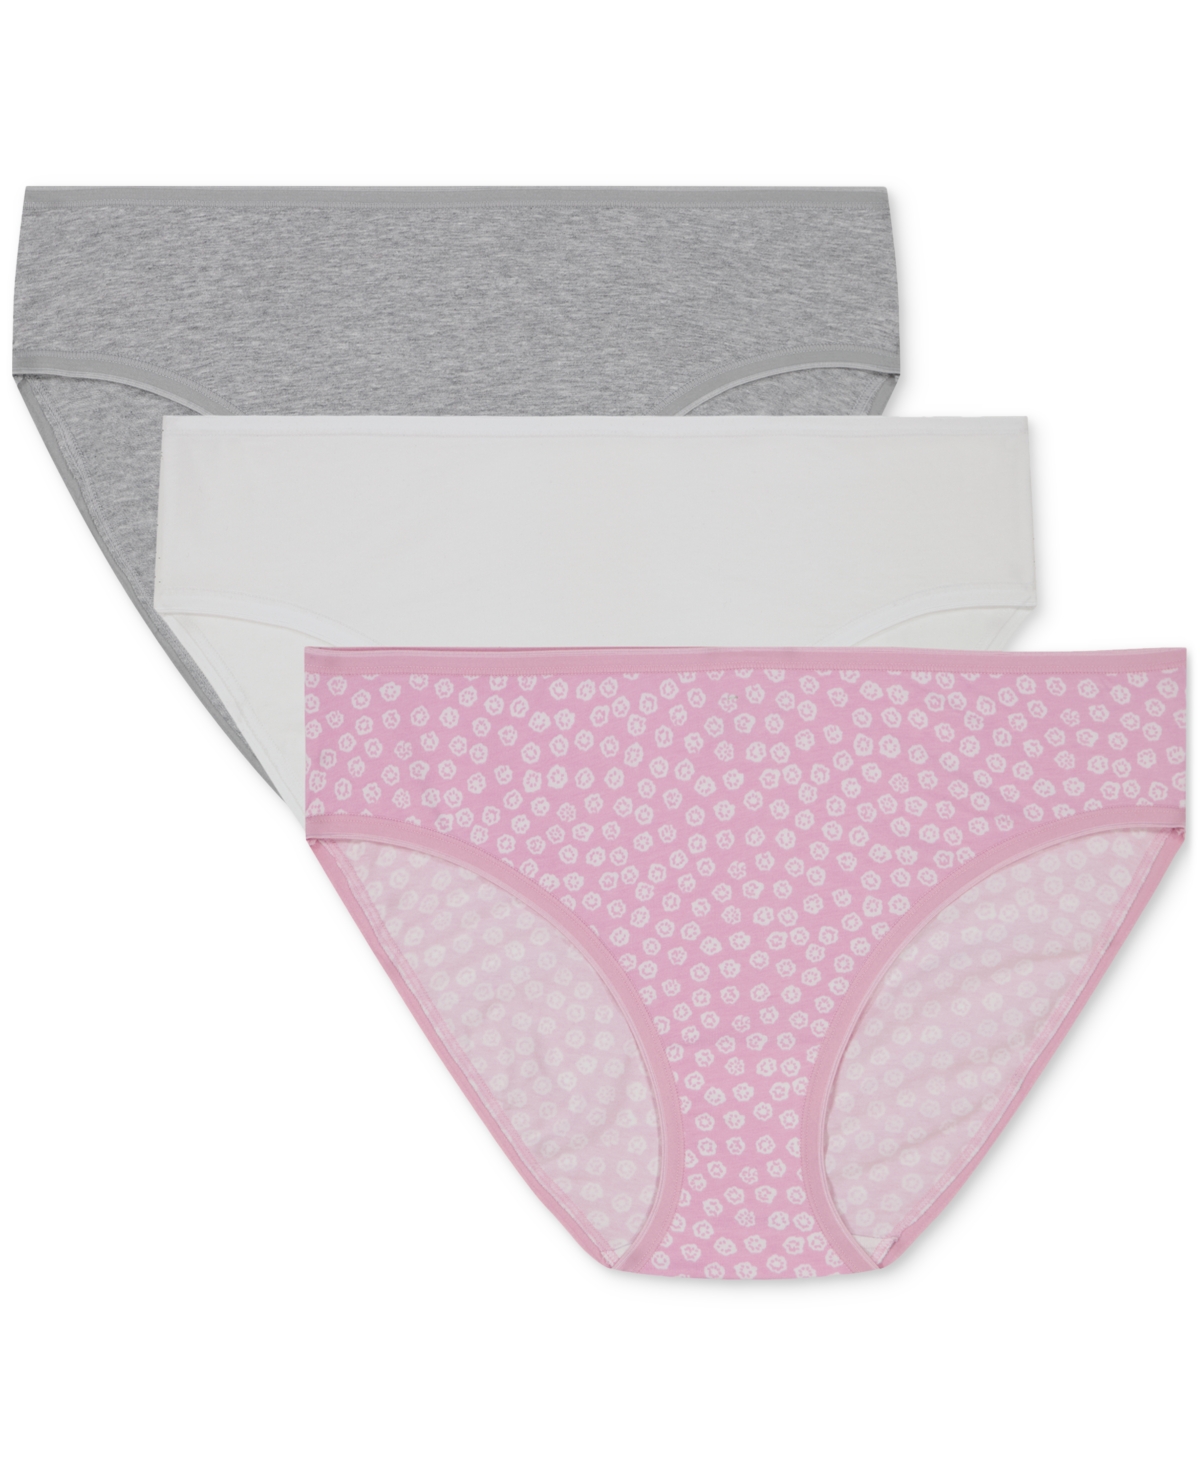 GapBody Women's 3-Pk. Hipster Underwear GPW00277 - Pink Lavender Floral/Light Heather Grey/